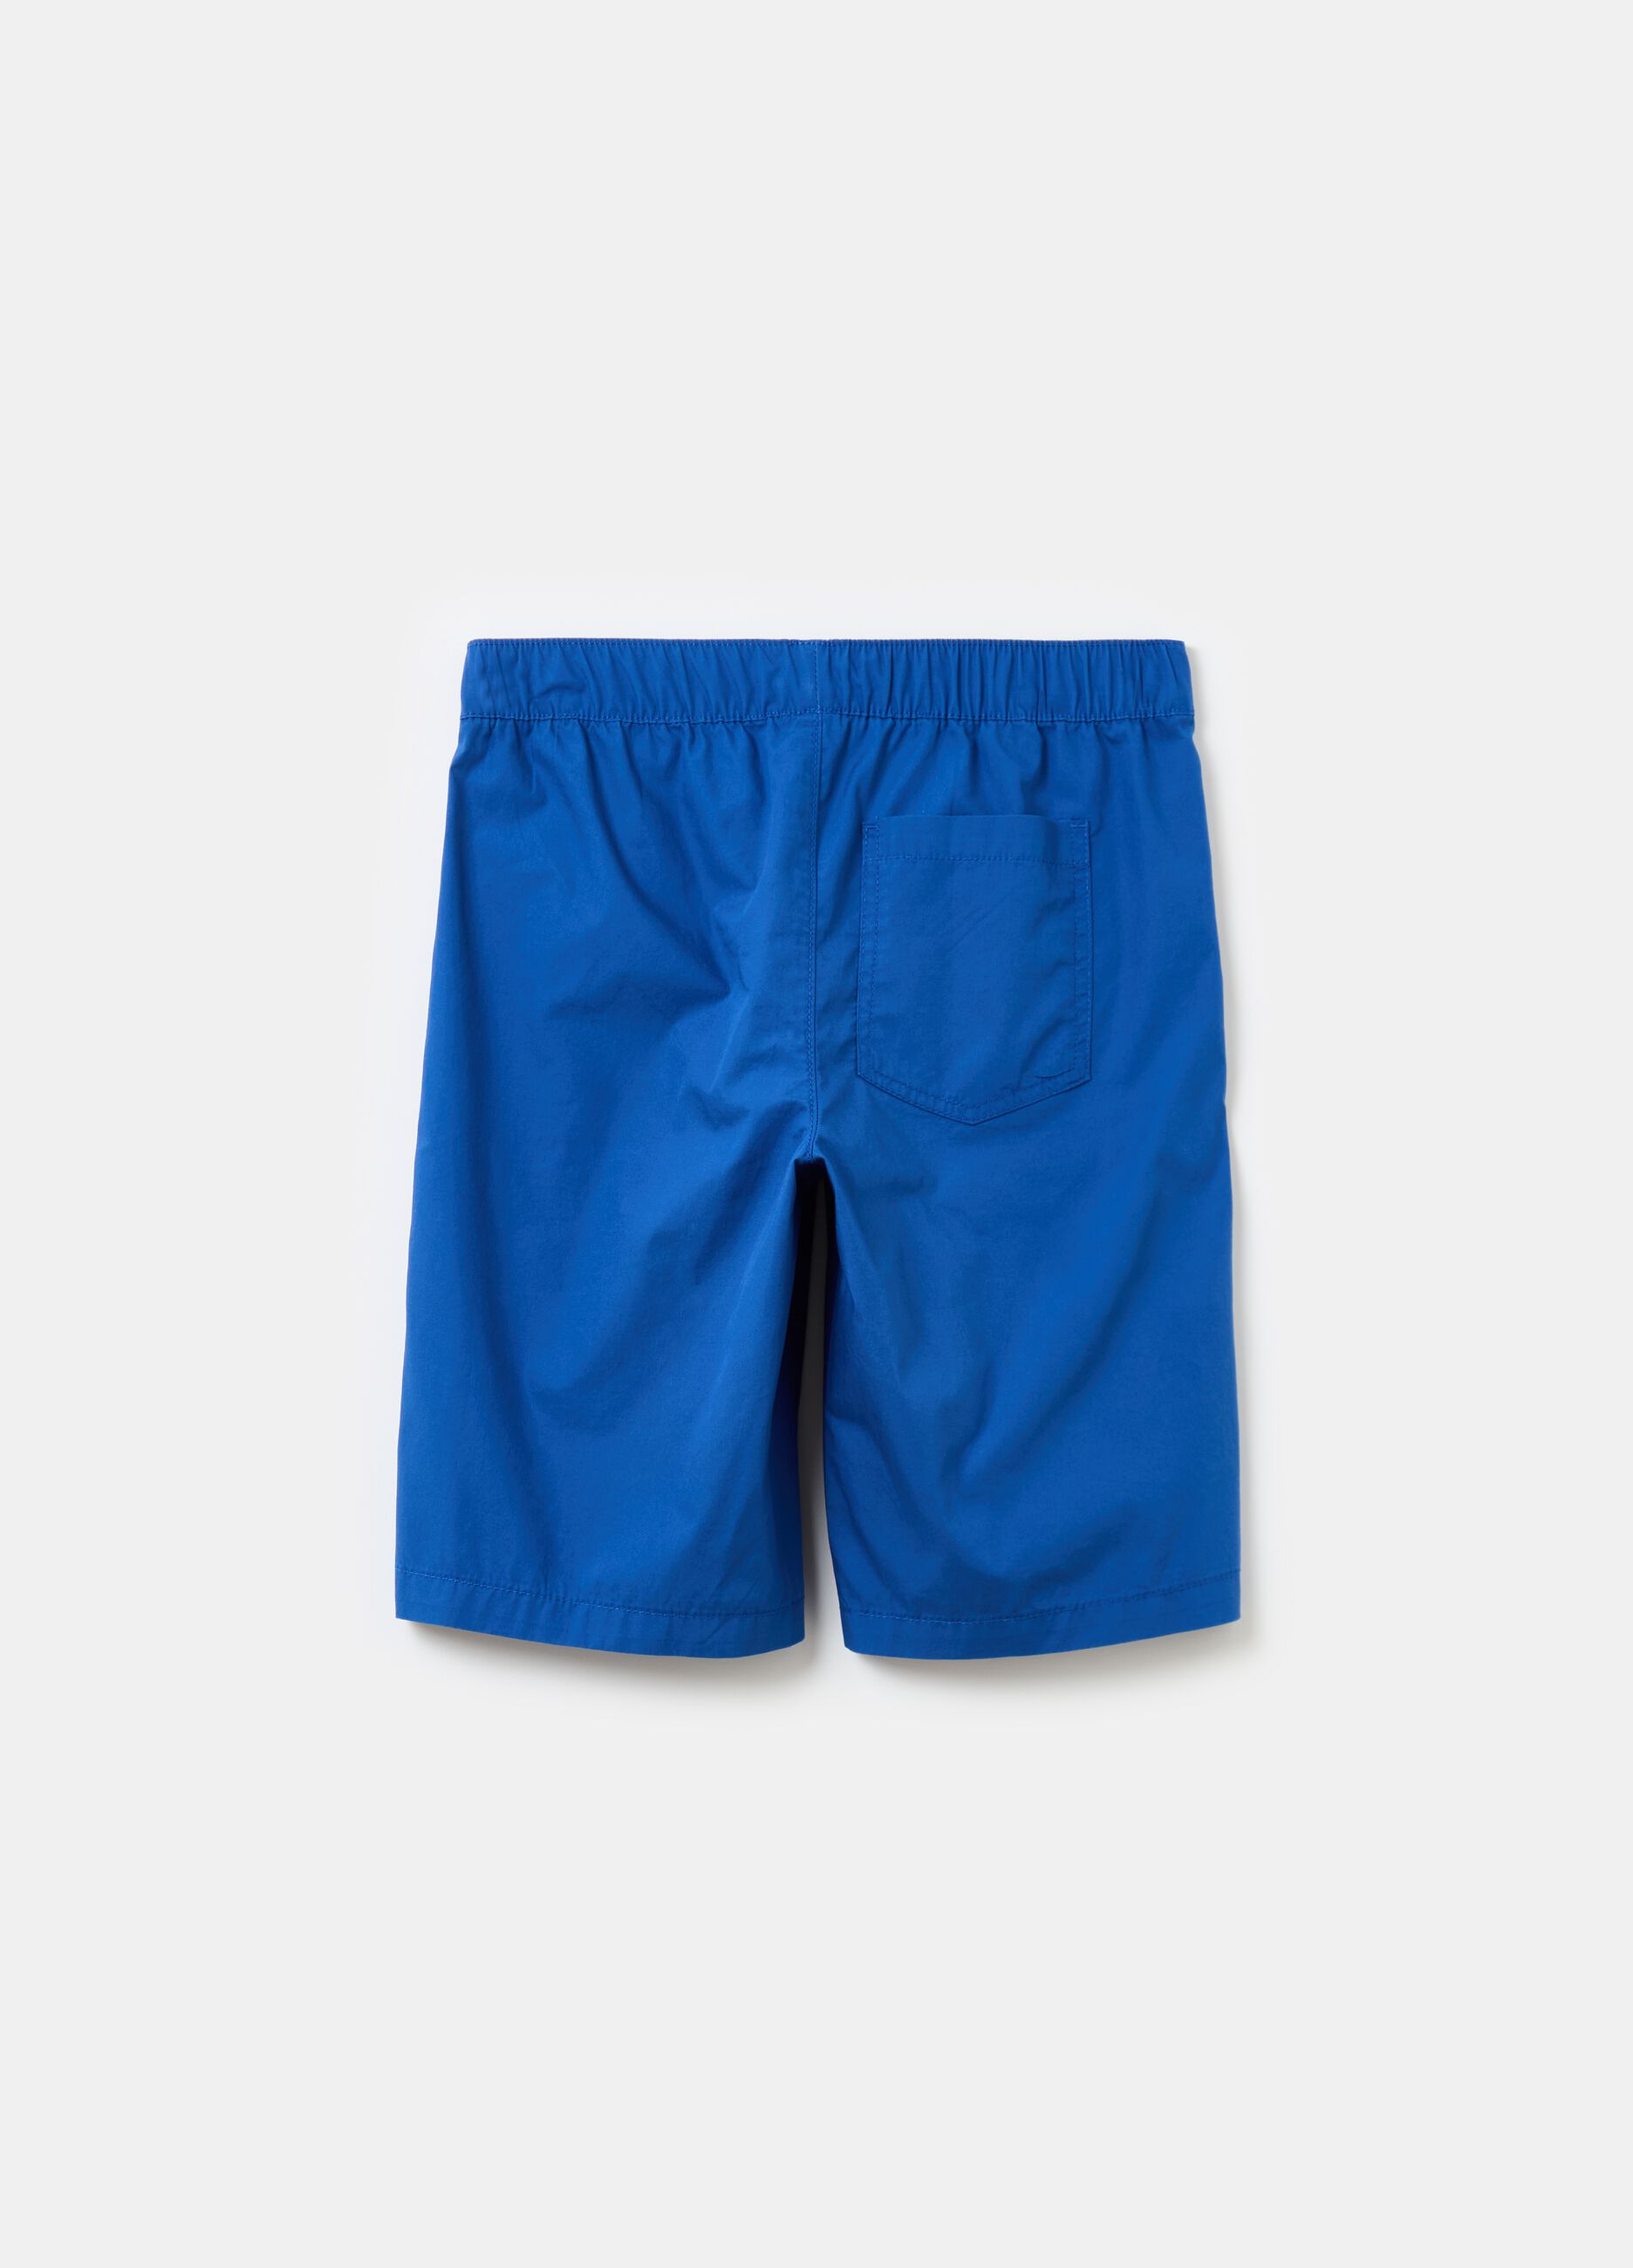 Pull-on Bermuda shorts in poplin